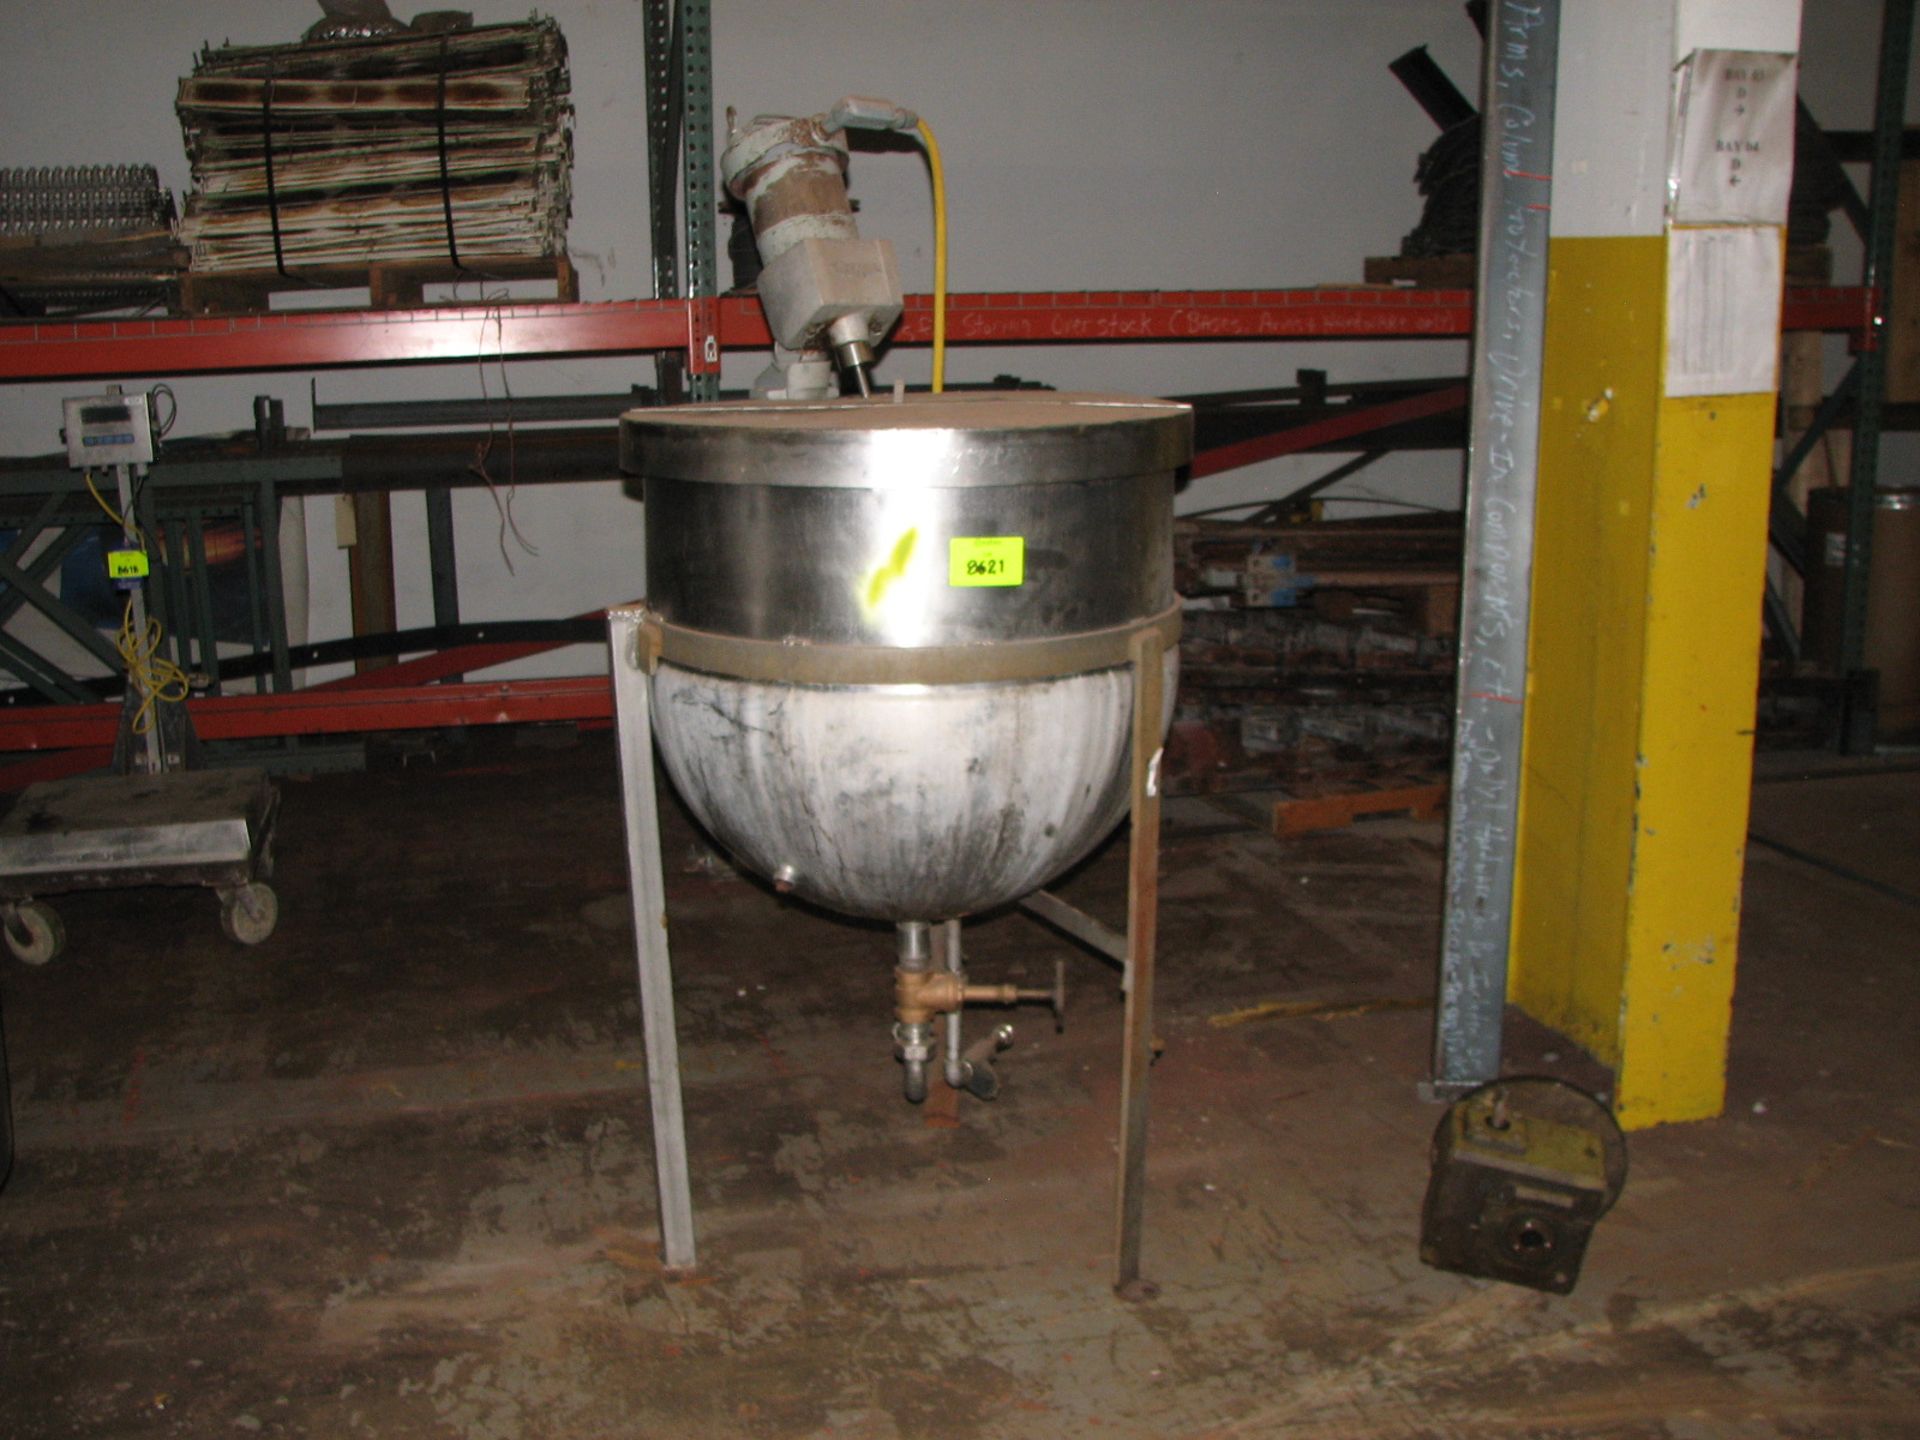 Groen jacketed mix kettle with Lightnin agitator [Franklin]